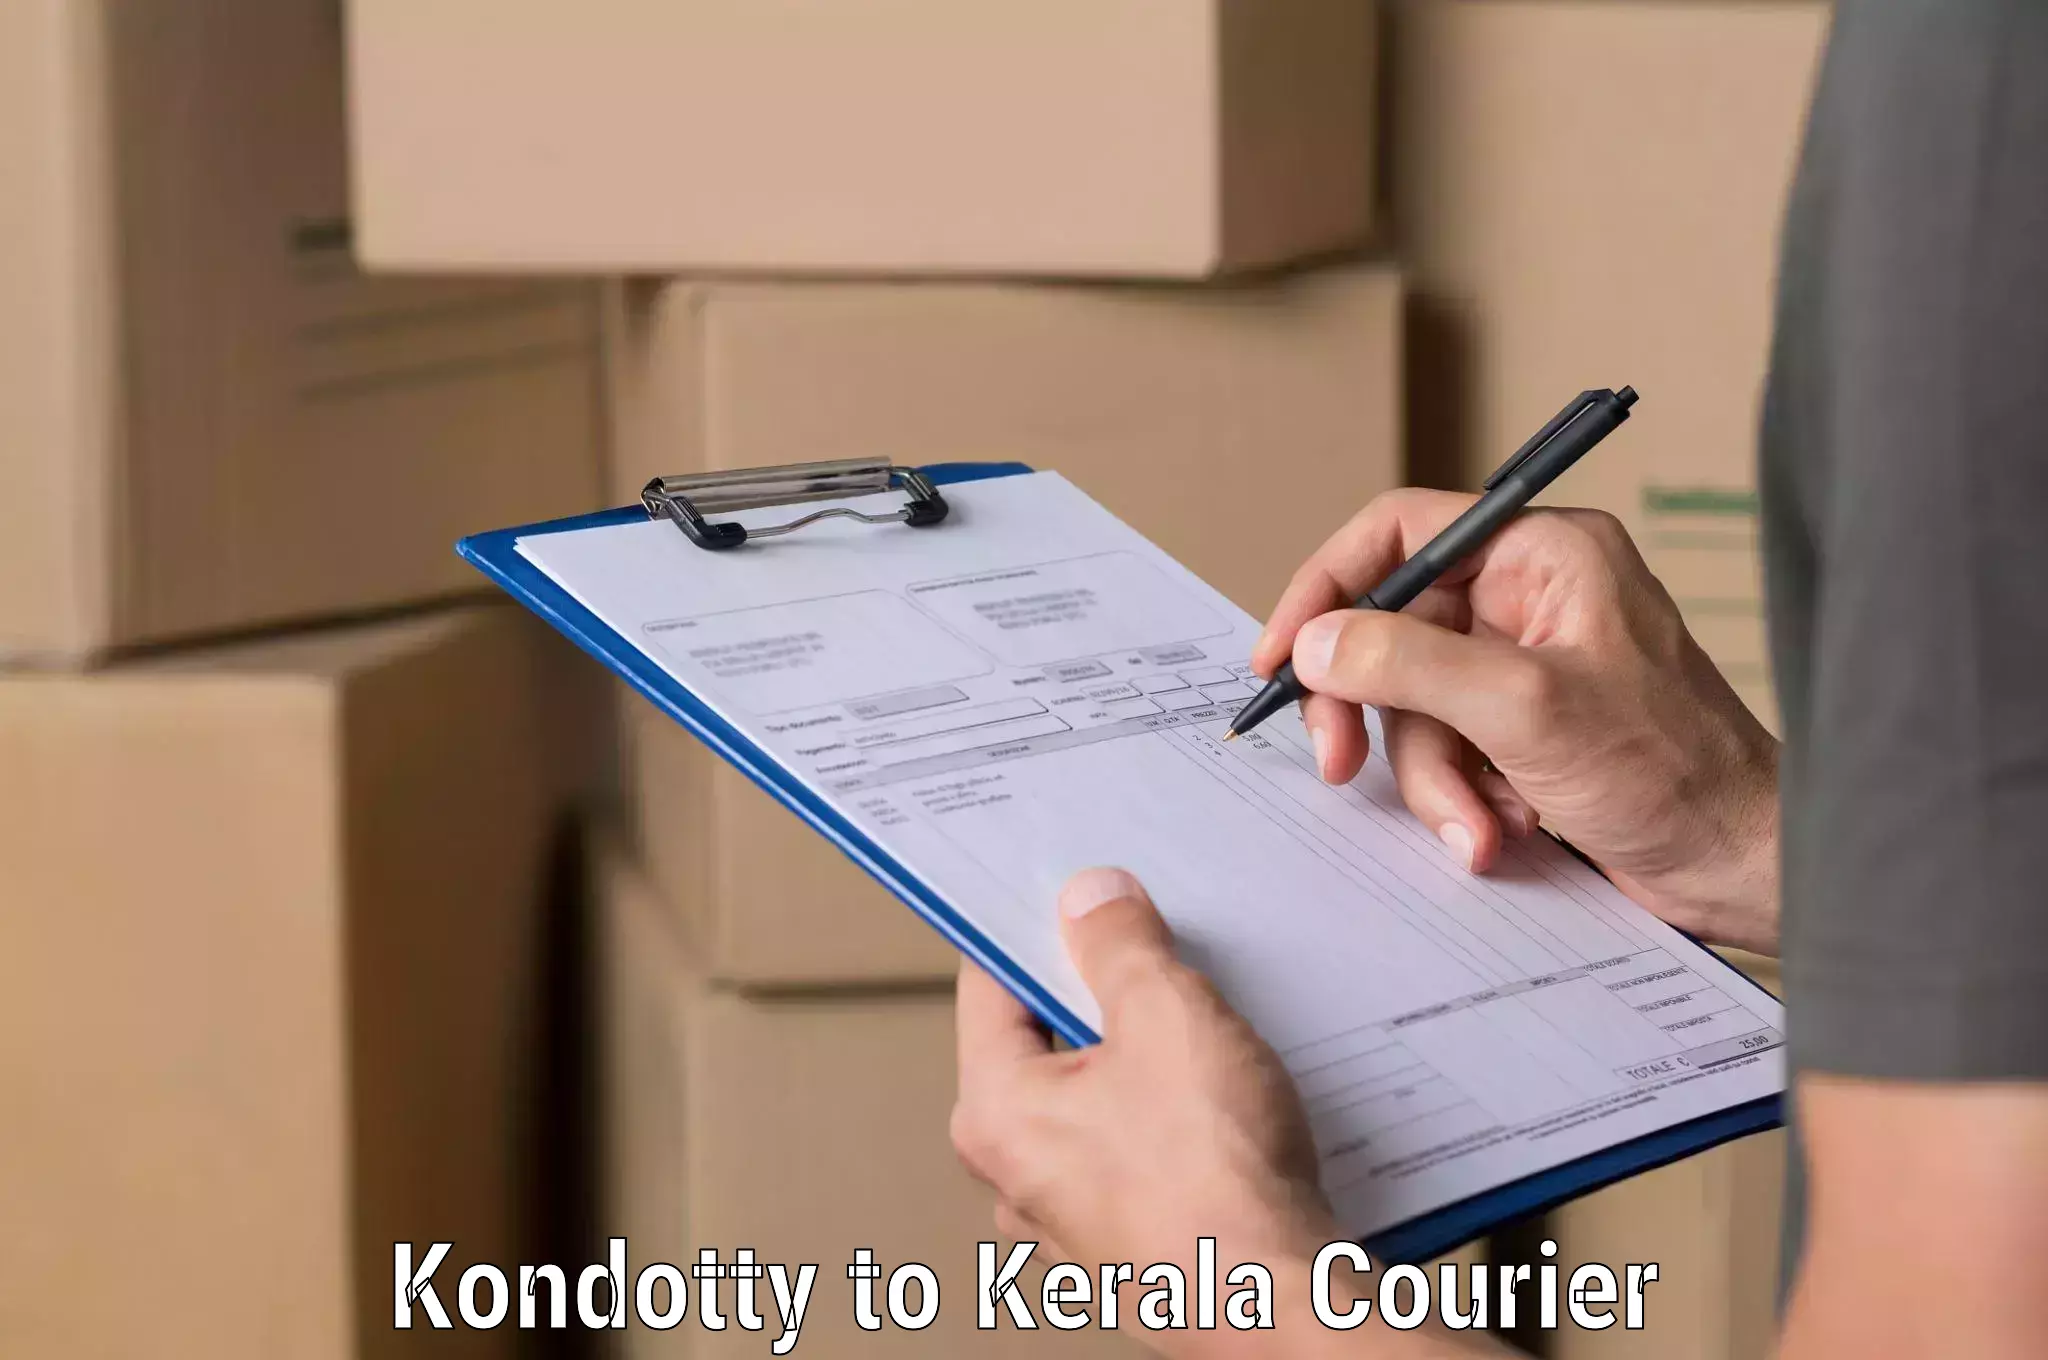 Rapid freight solutions Kondotty to Kerala